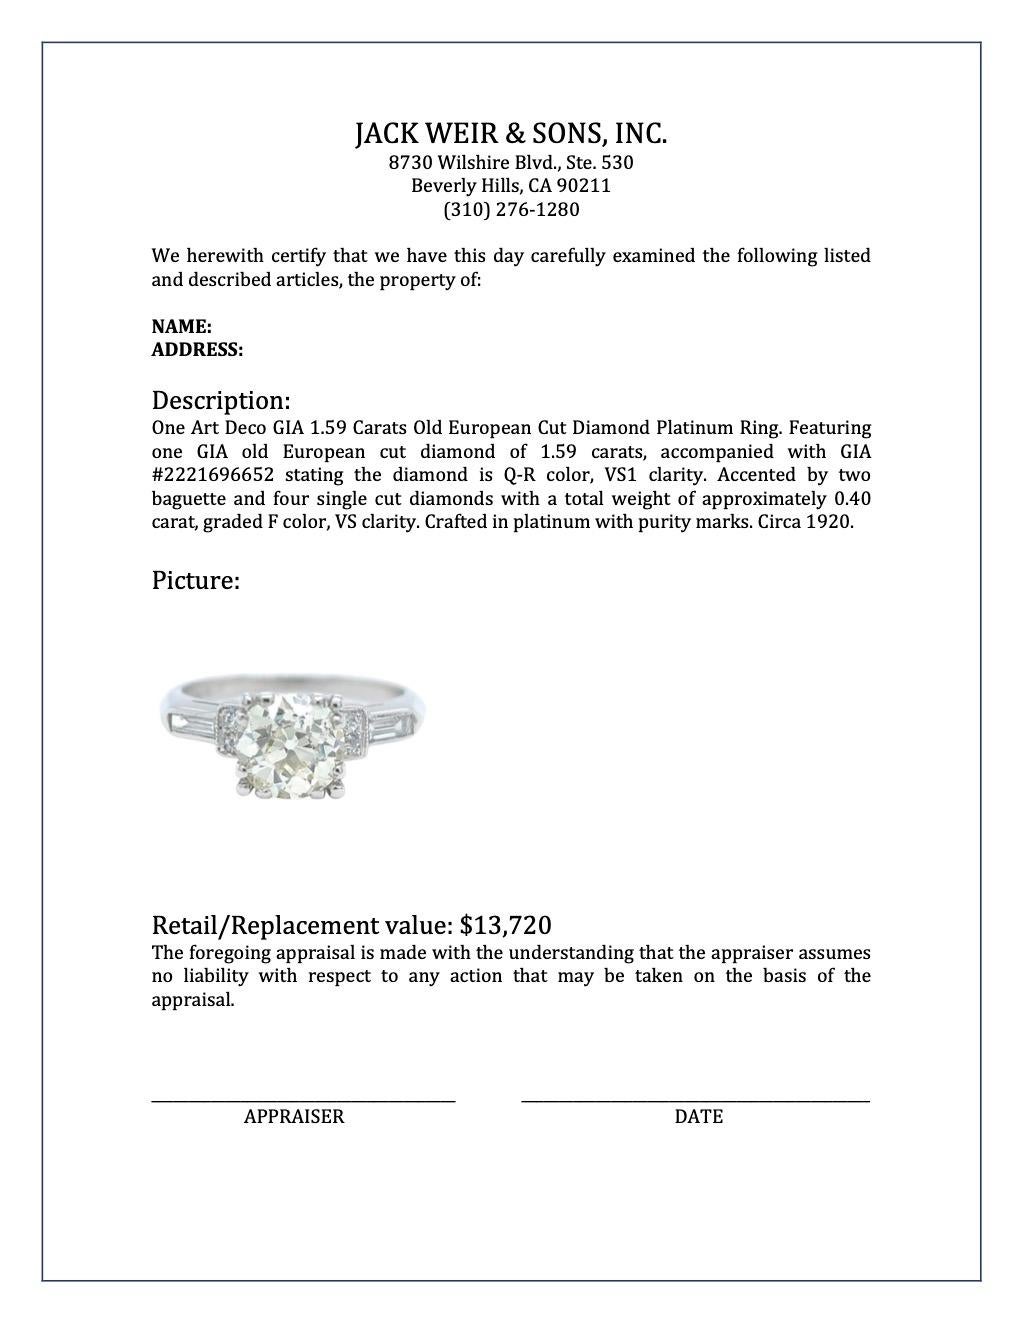 Art Deco GIA 1.59 Carats Old European Cut Diamond Platinum Ring 4